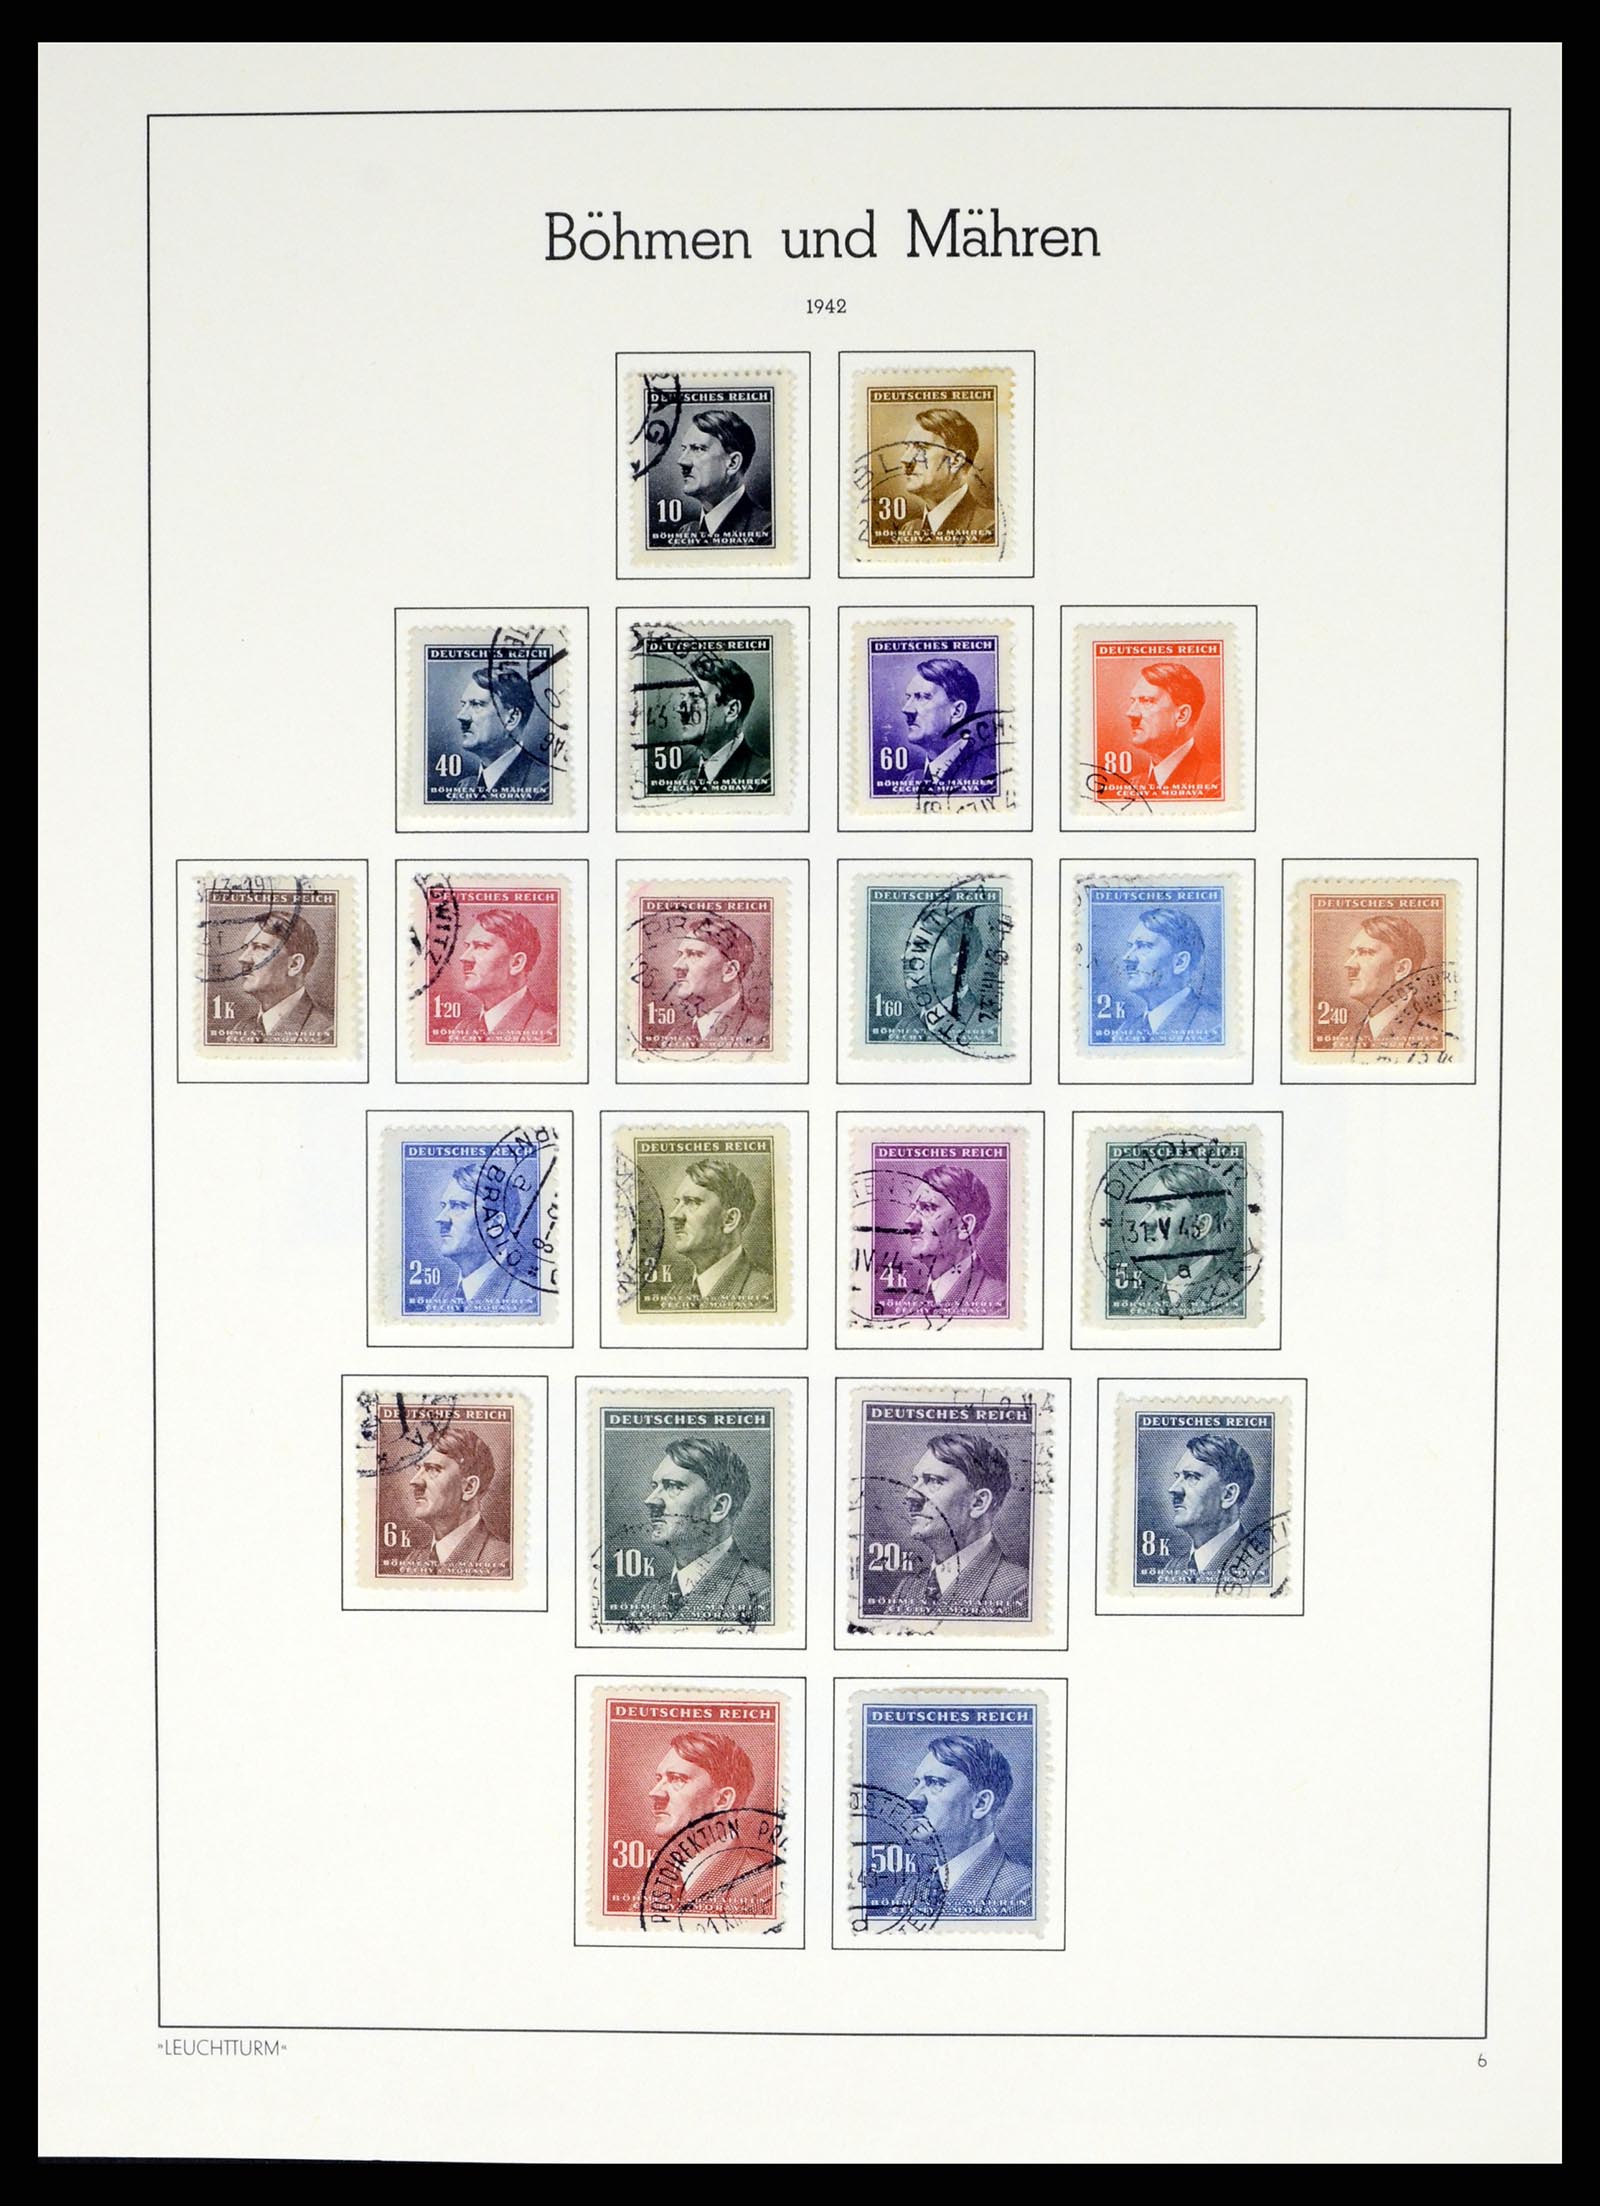 37497 120 - Stamp collection 37497 German Reich 1872-1945.